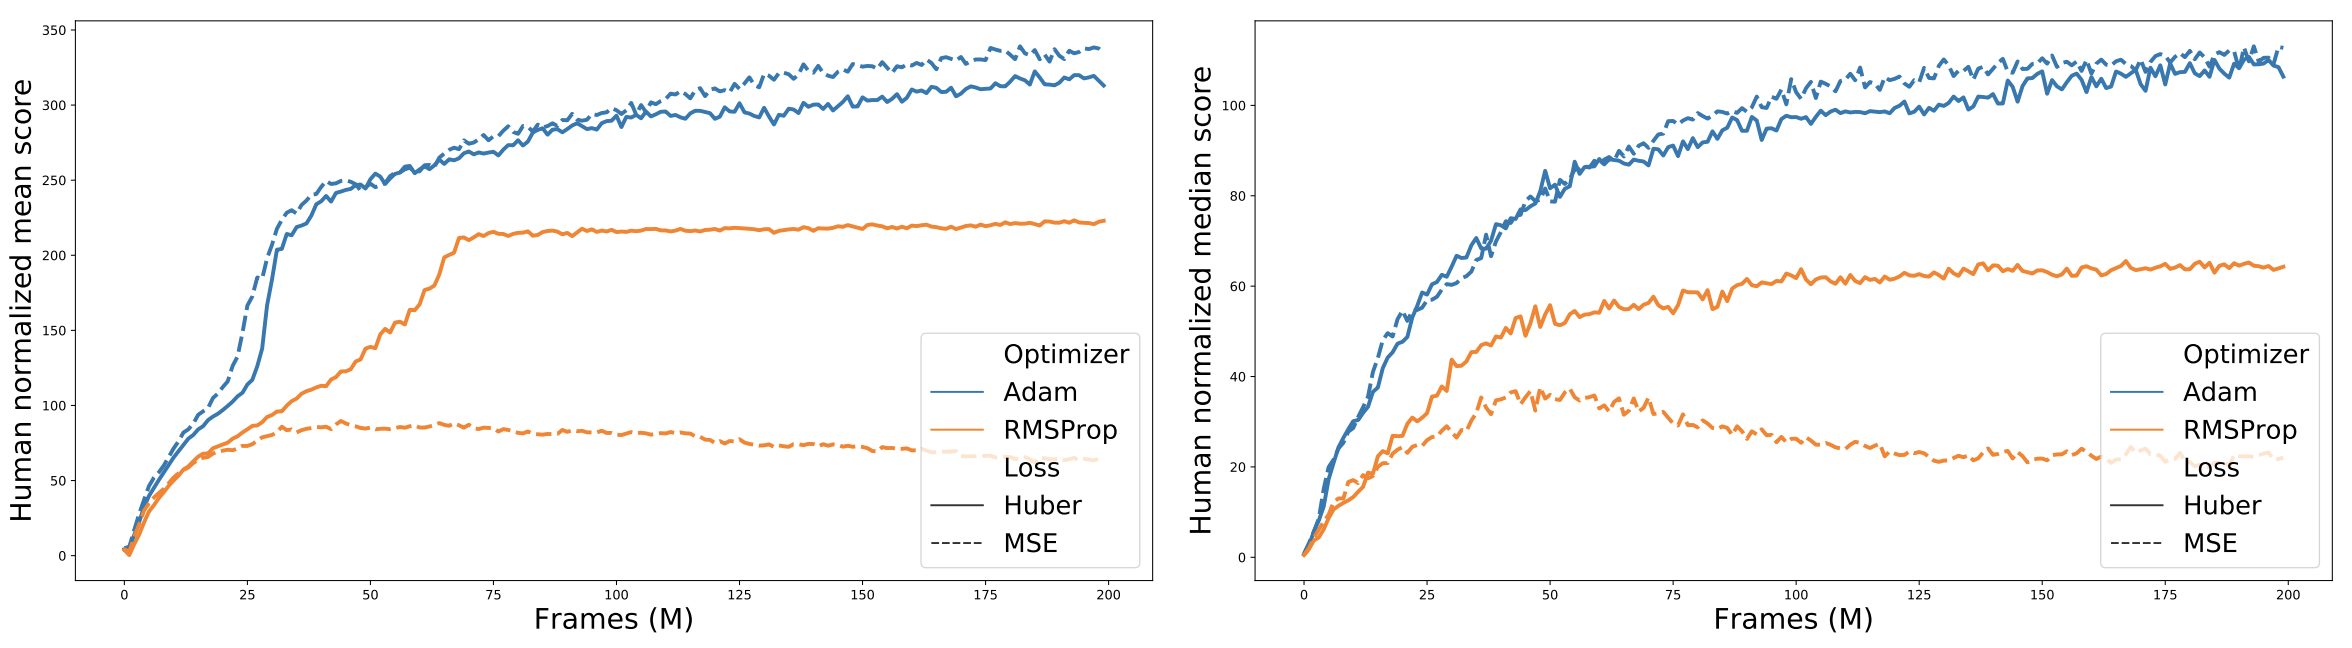 Loss-Optimizer curves